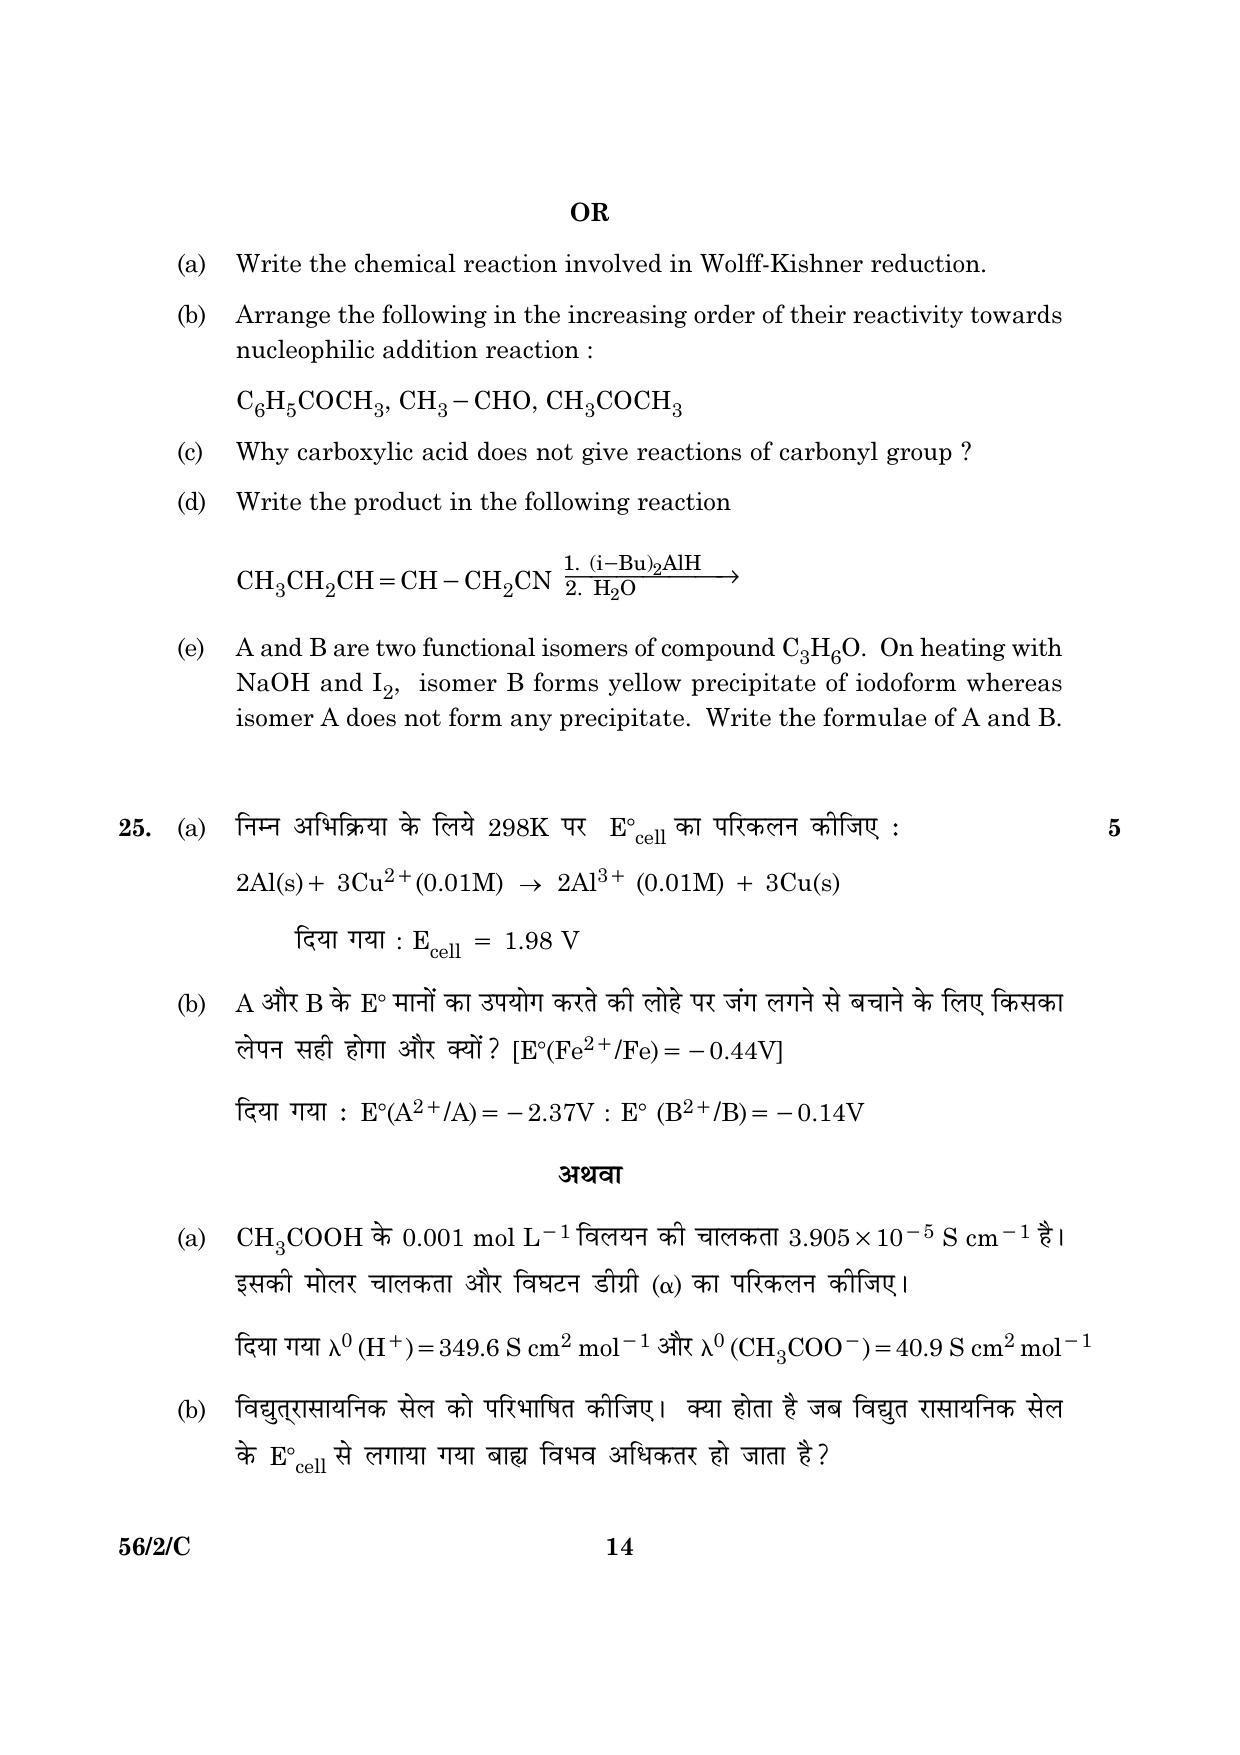 CBSE Class 12 056 Set 2 C Chemistry 2016 Question Paper - Page 14